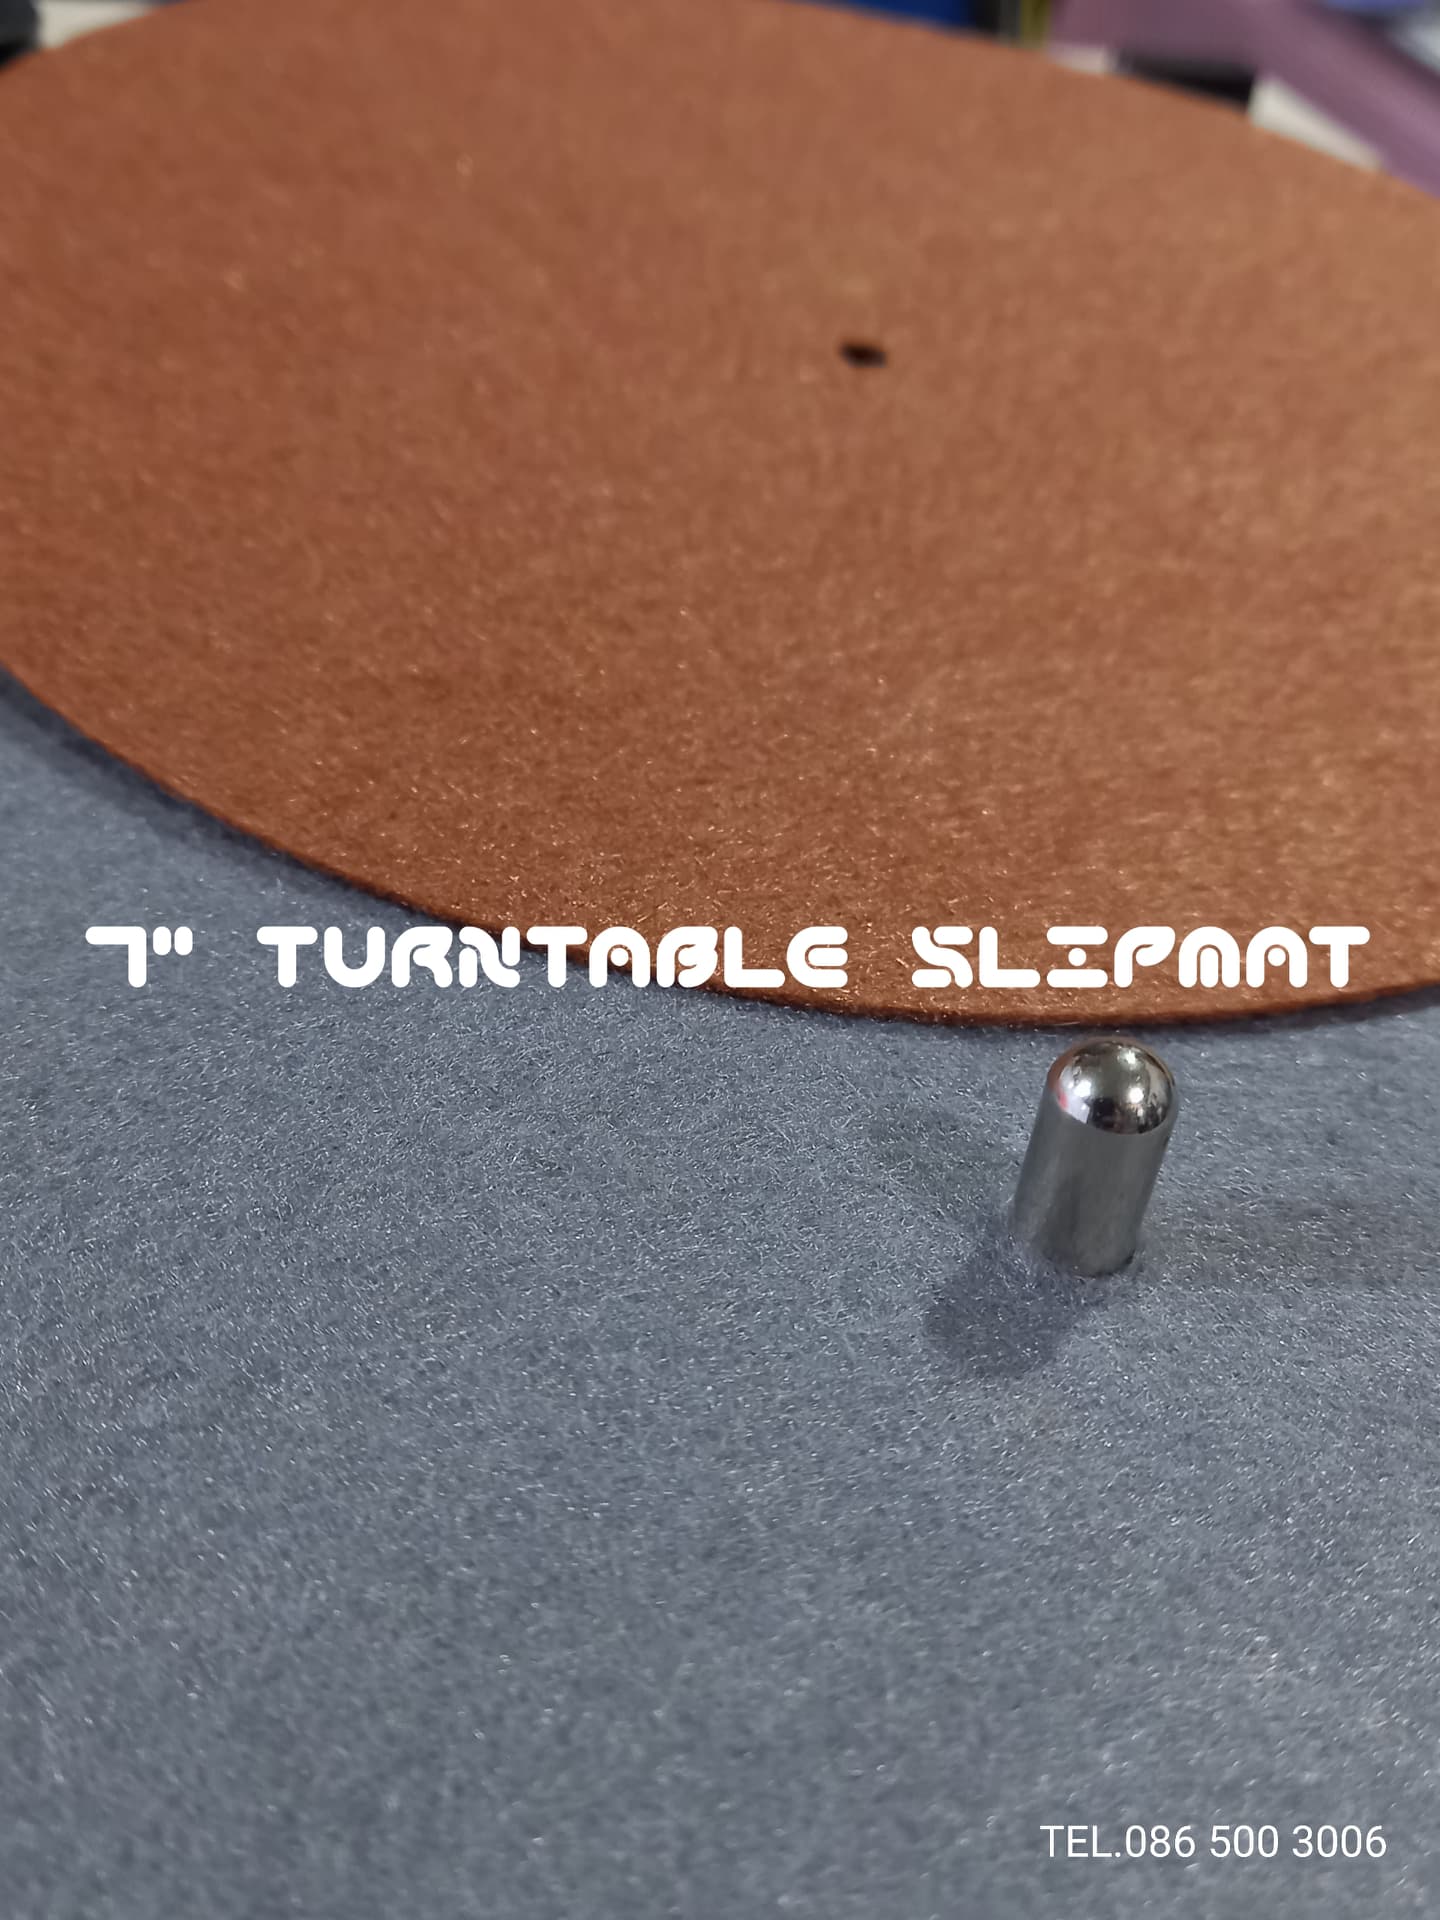 Turntable Slipmat ขนาด 7 นิ้ว